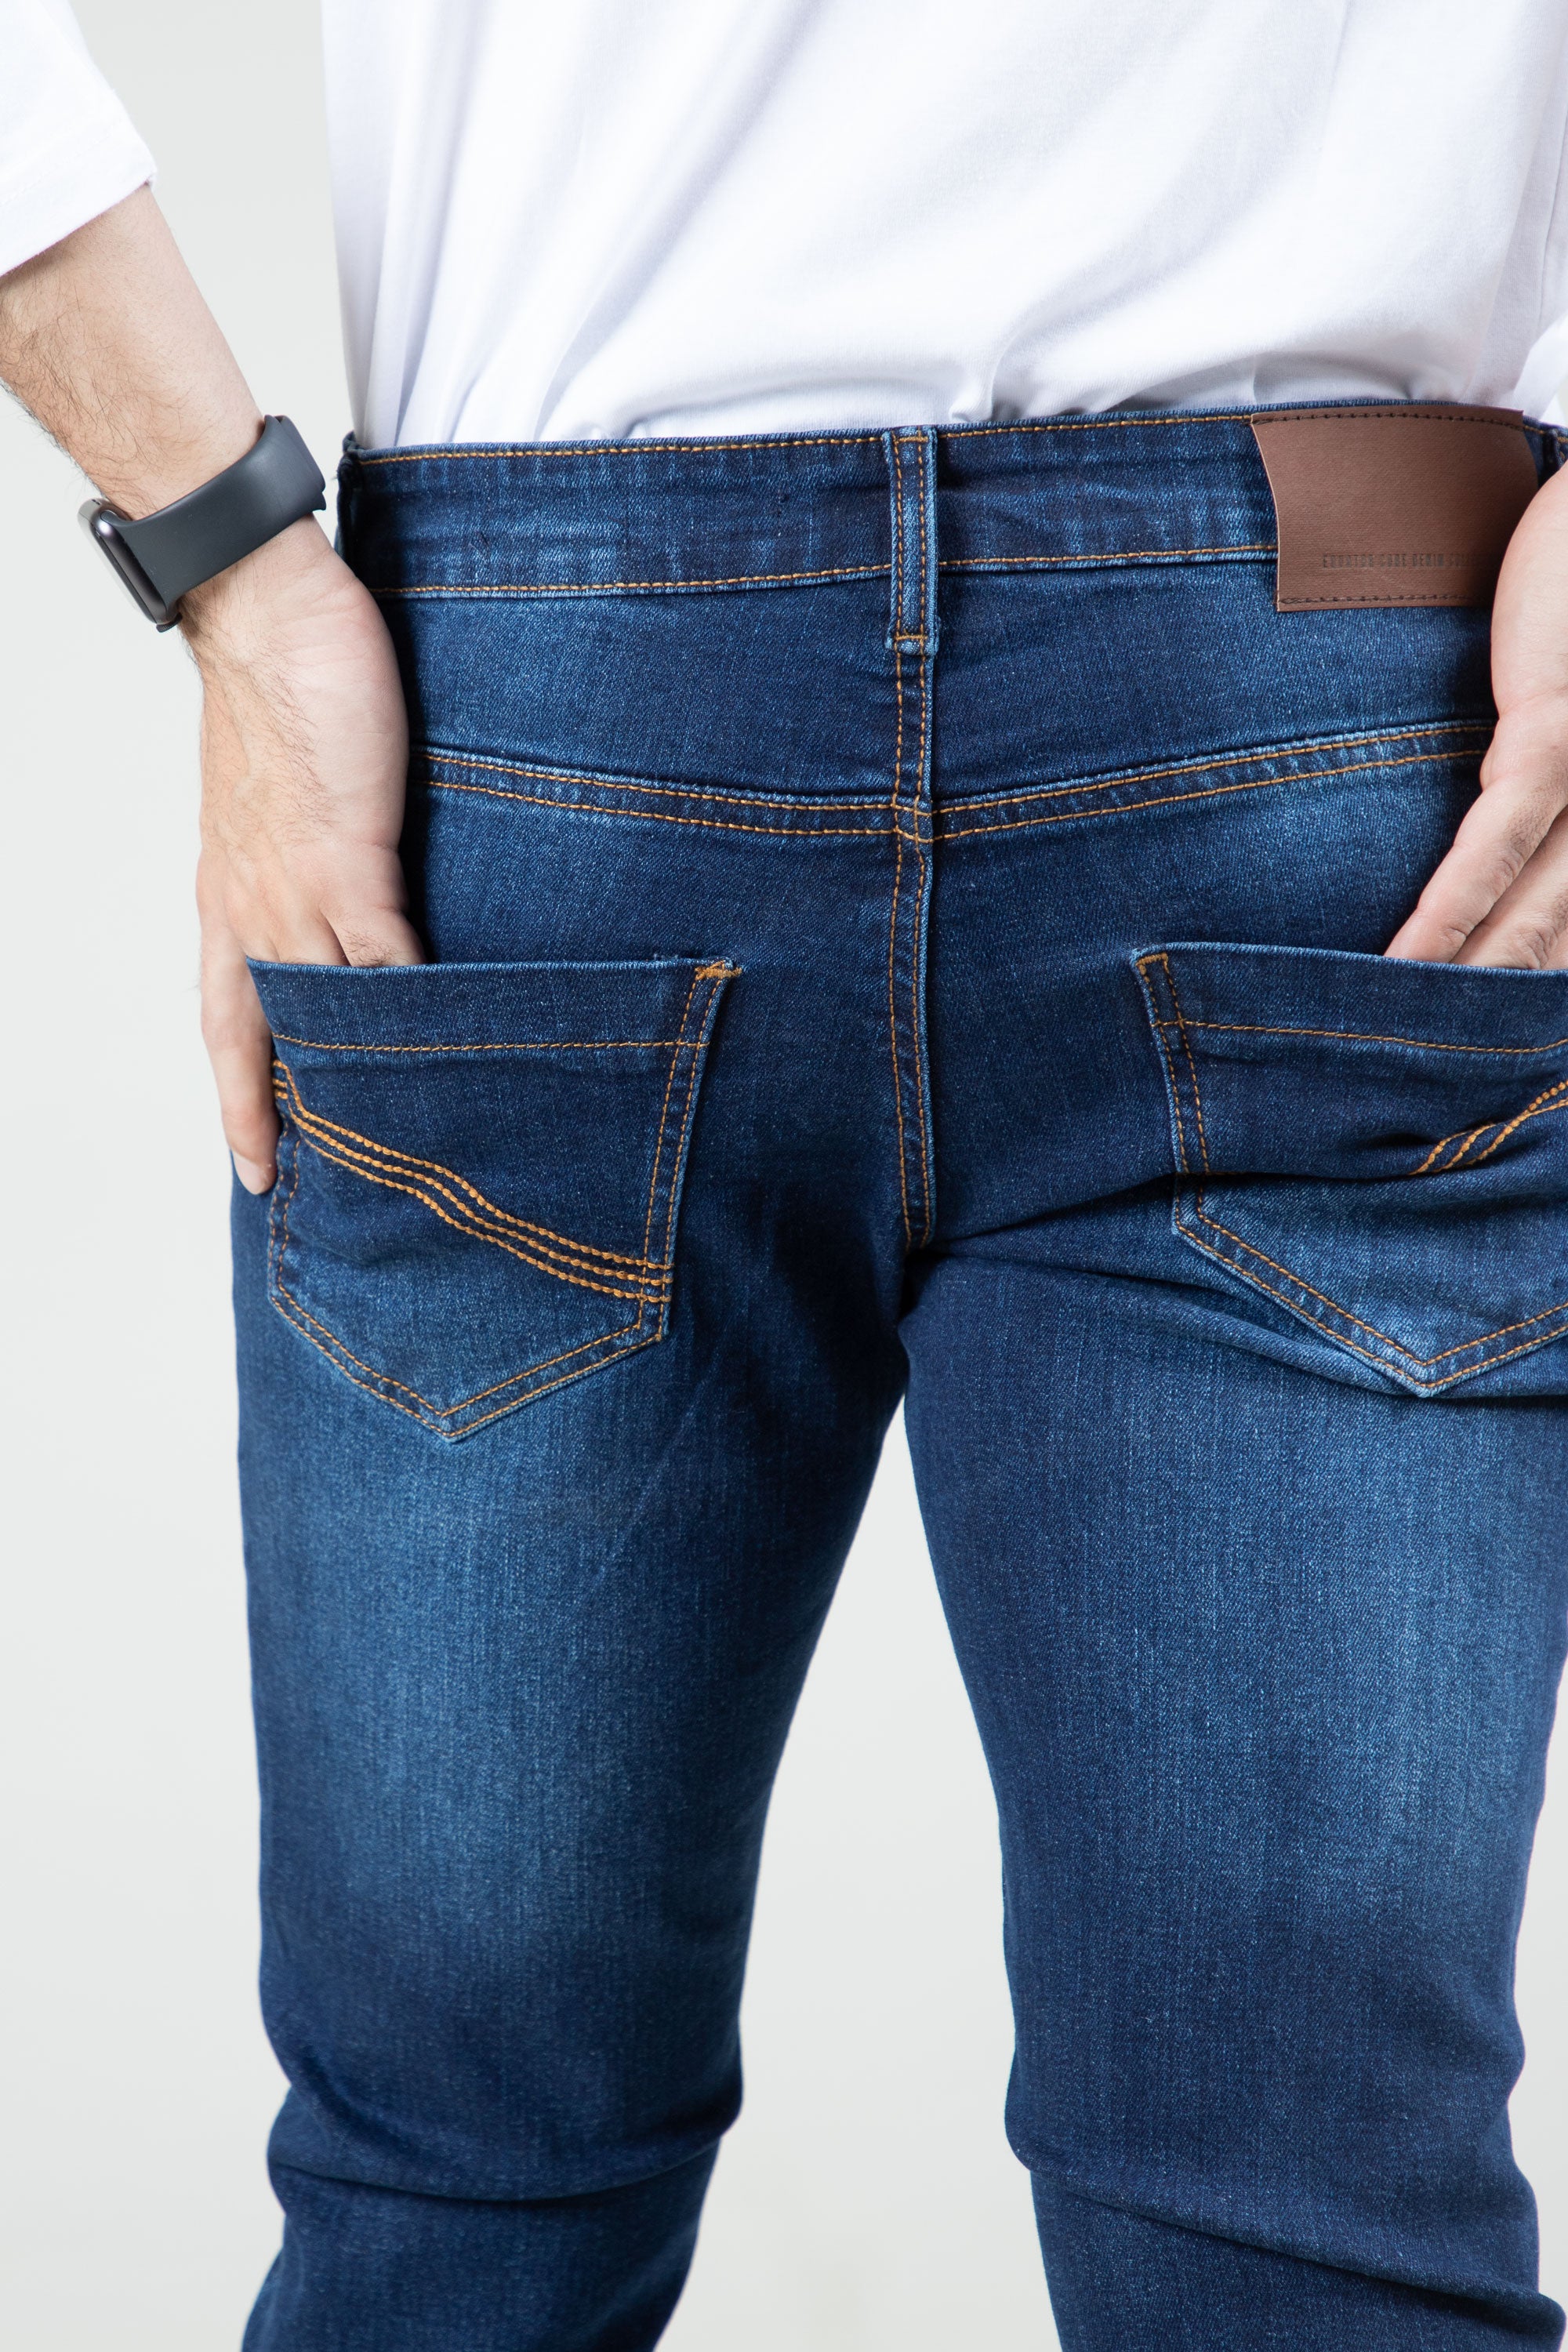 Lapis Blue Jeans-Skinny Fit